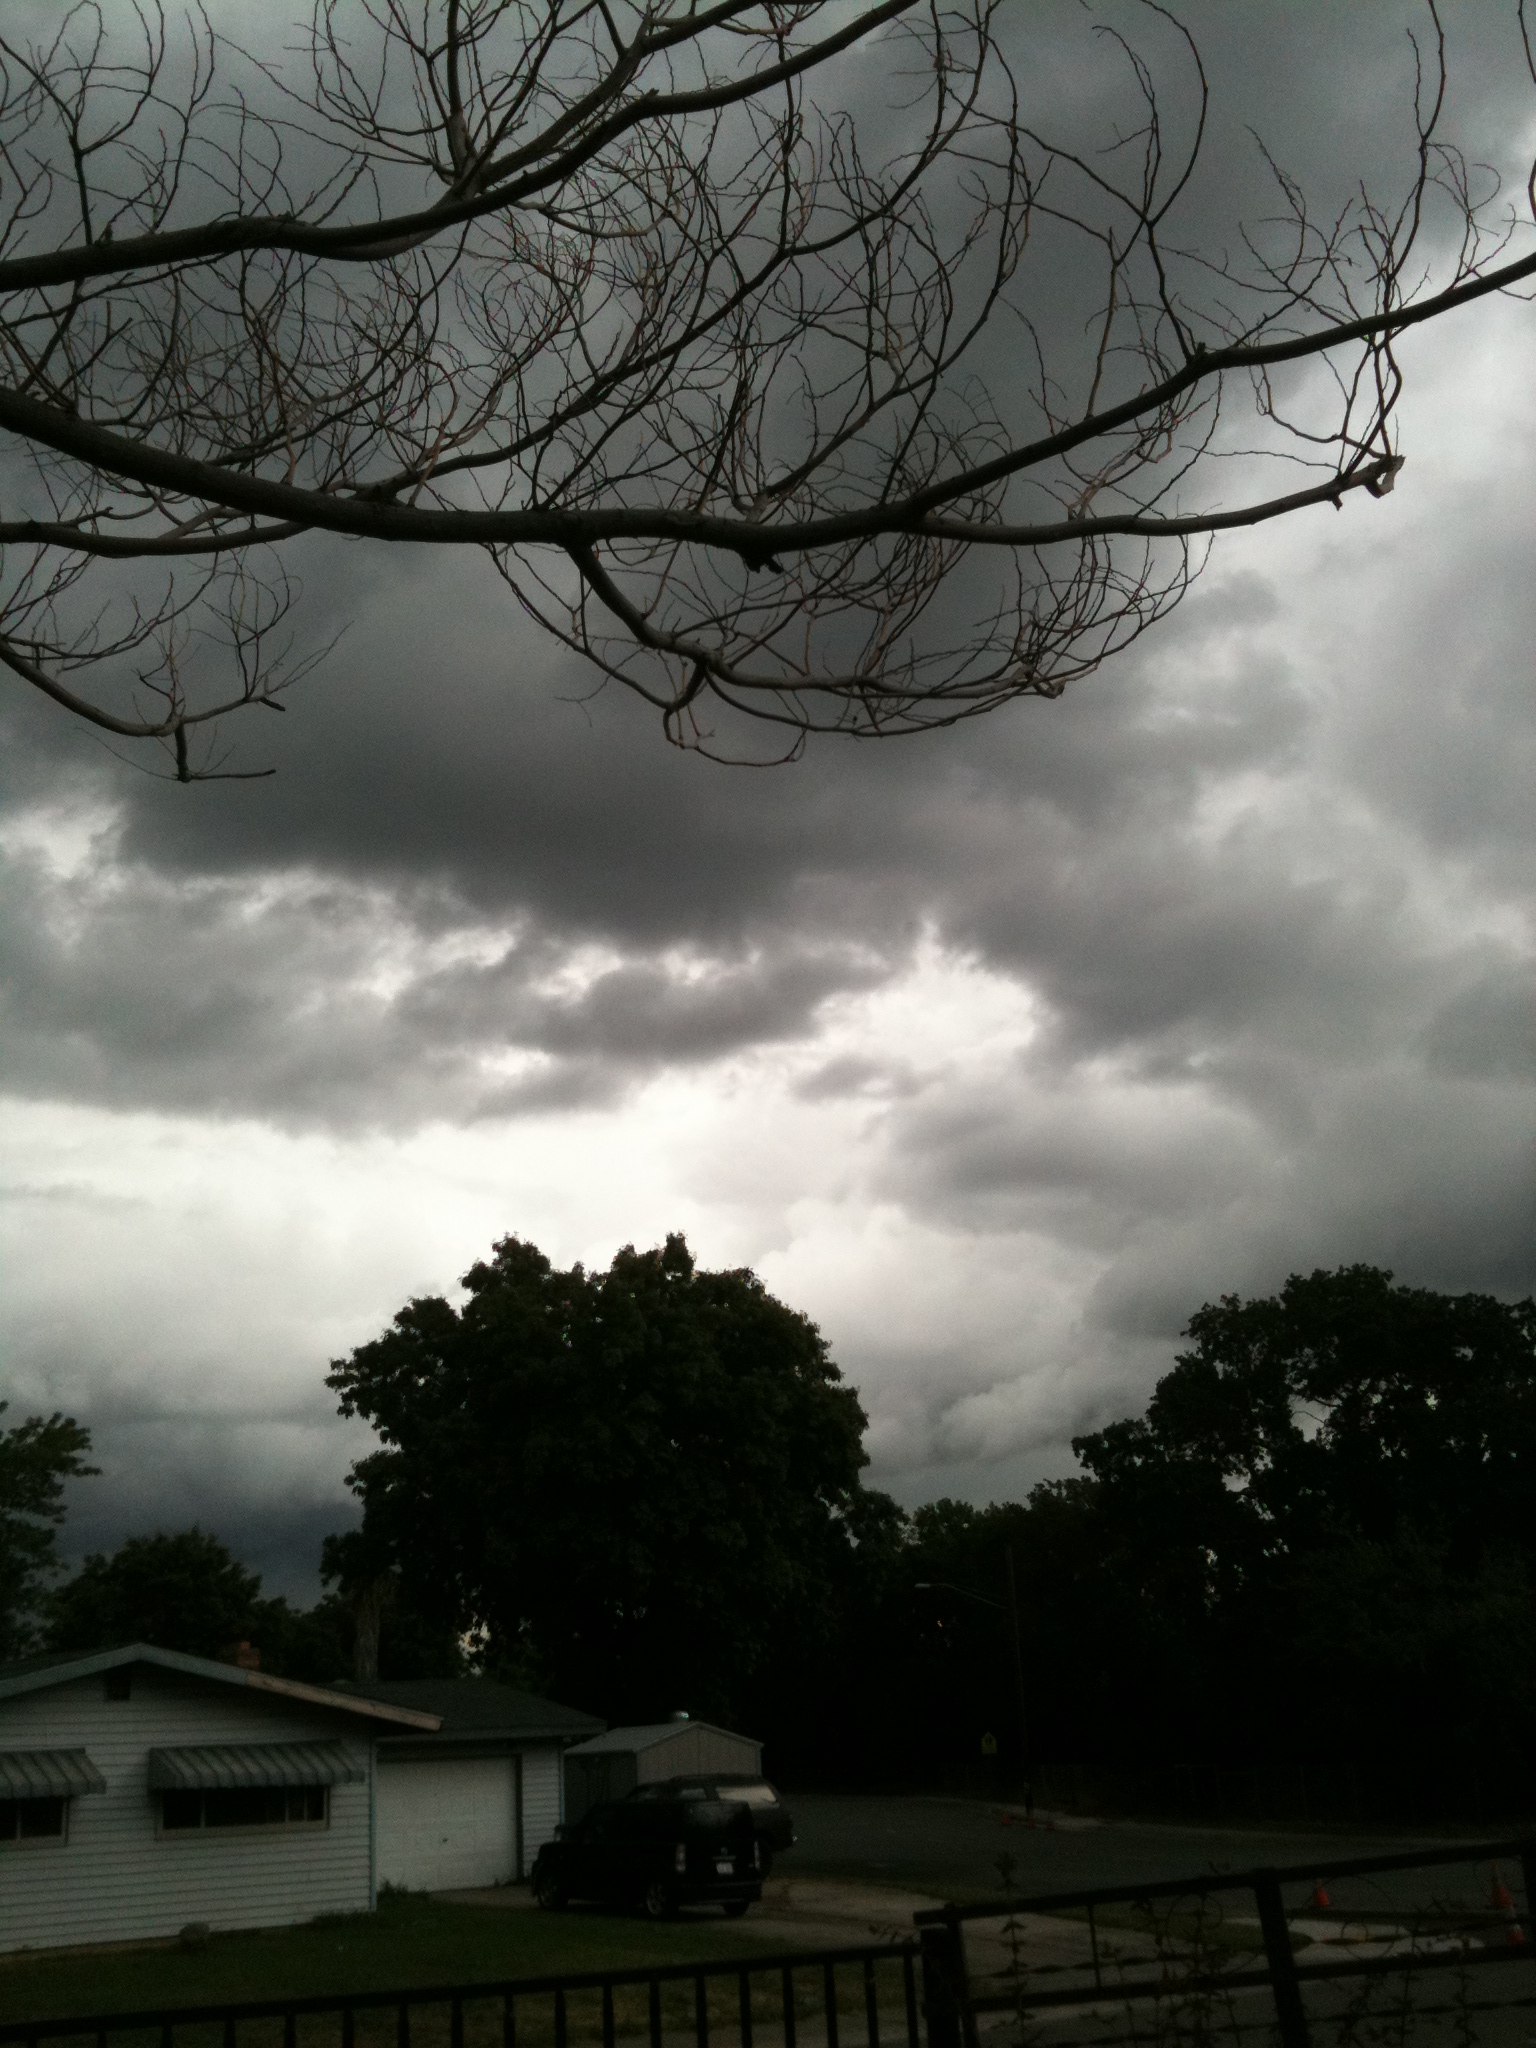 Crazy Weather In Sacramento Today - Mom's Blog1536 x 2048